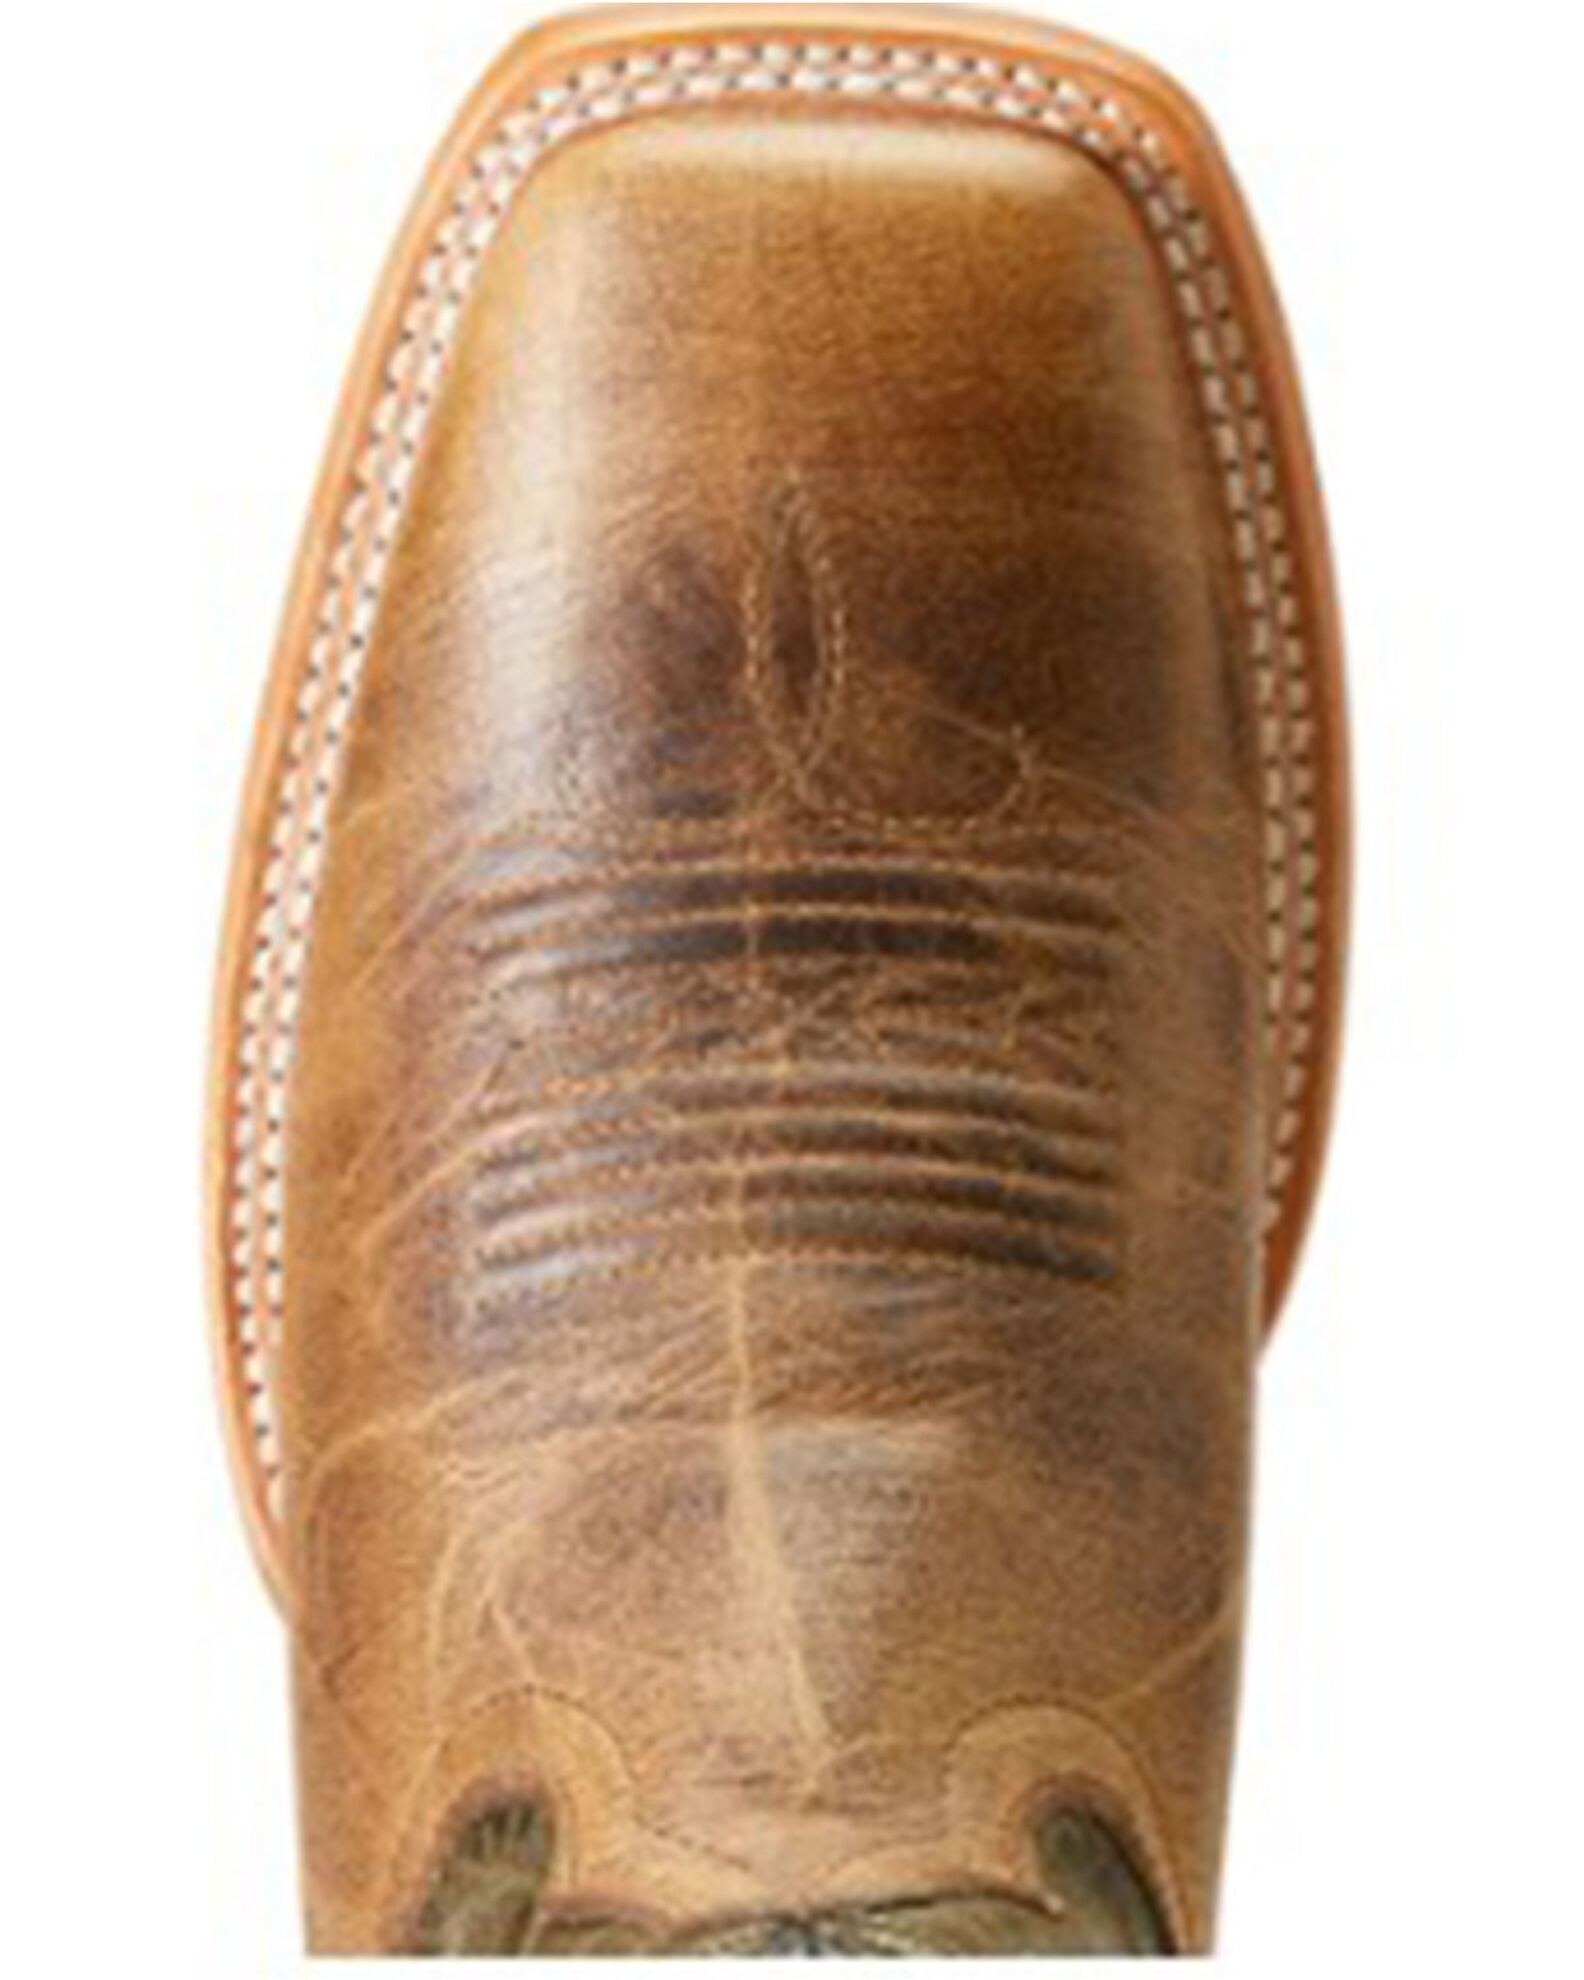 Ariat Men's Cowboss Western Boot